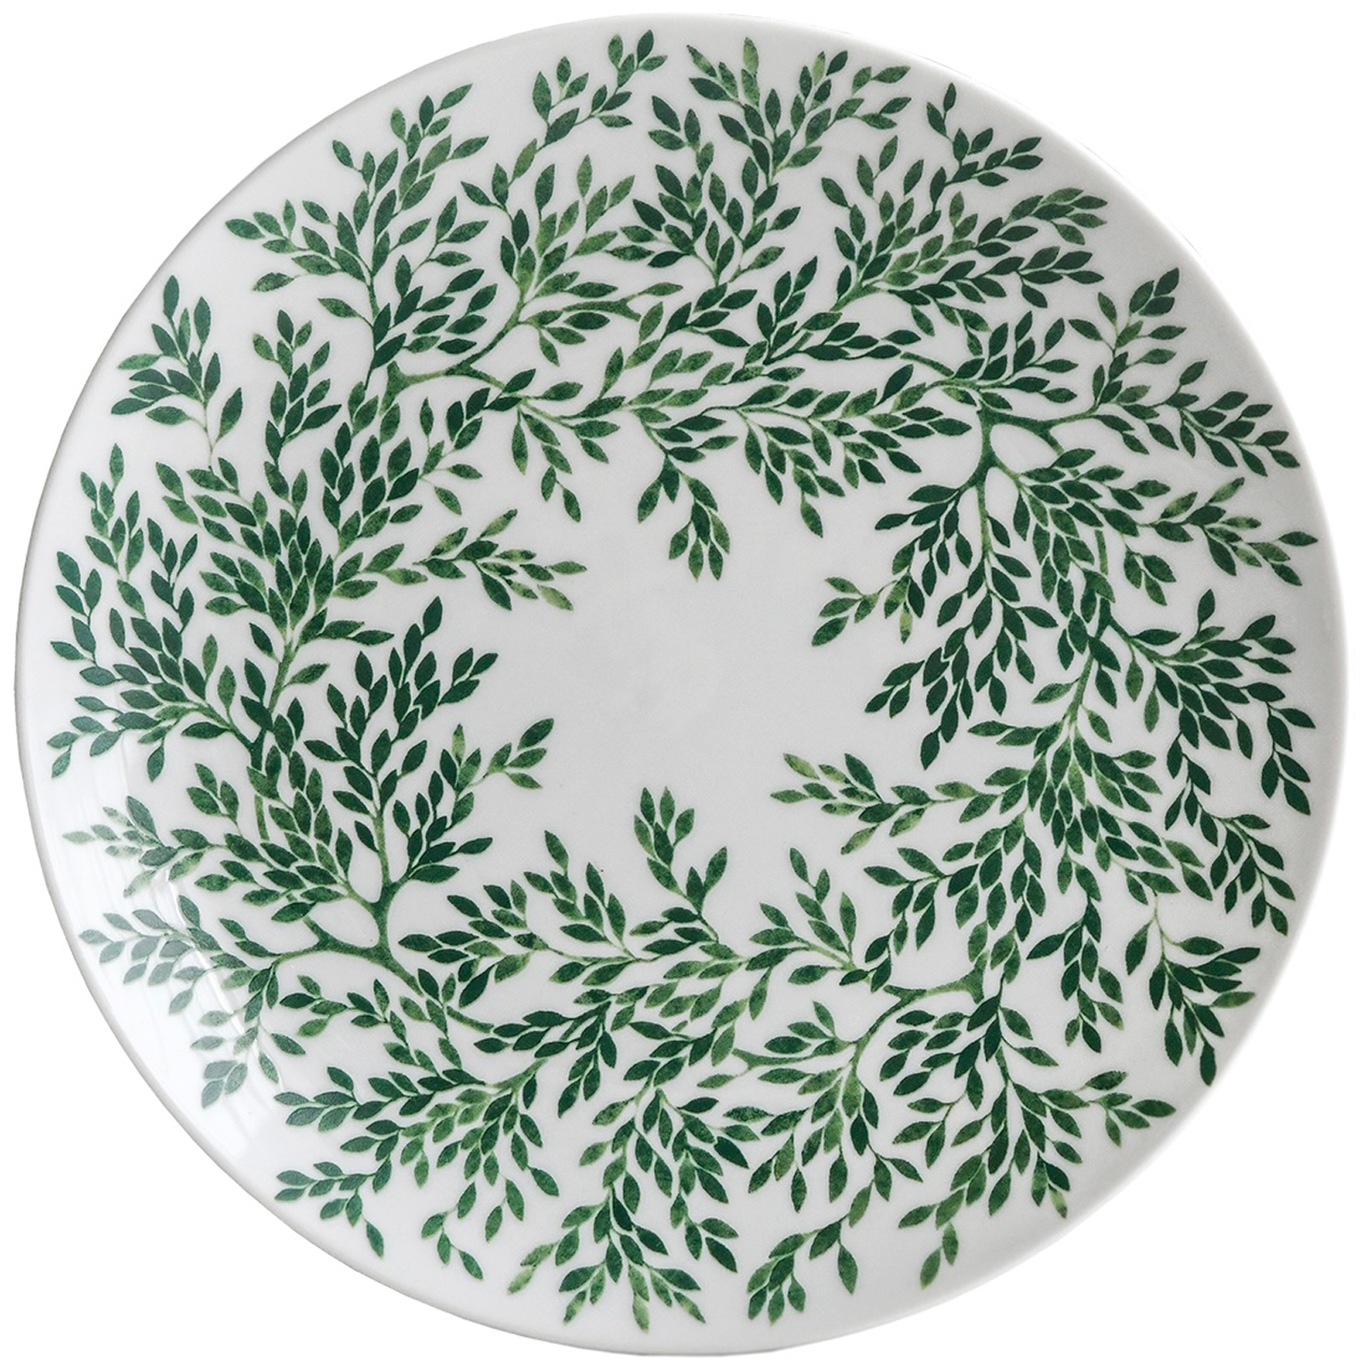 Botanica Myrten Side Plate 21 cm, Green